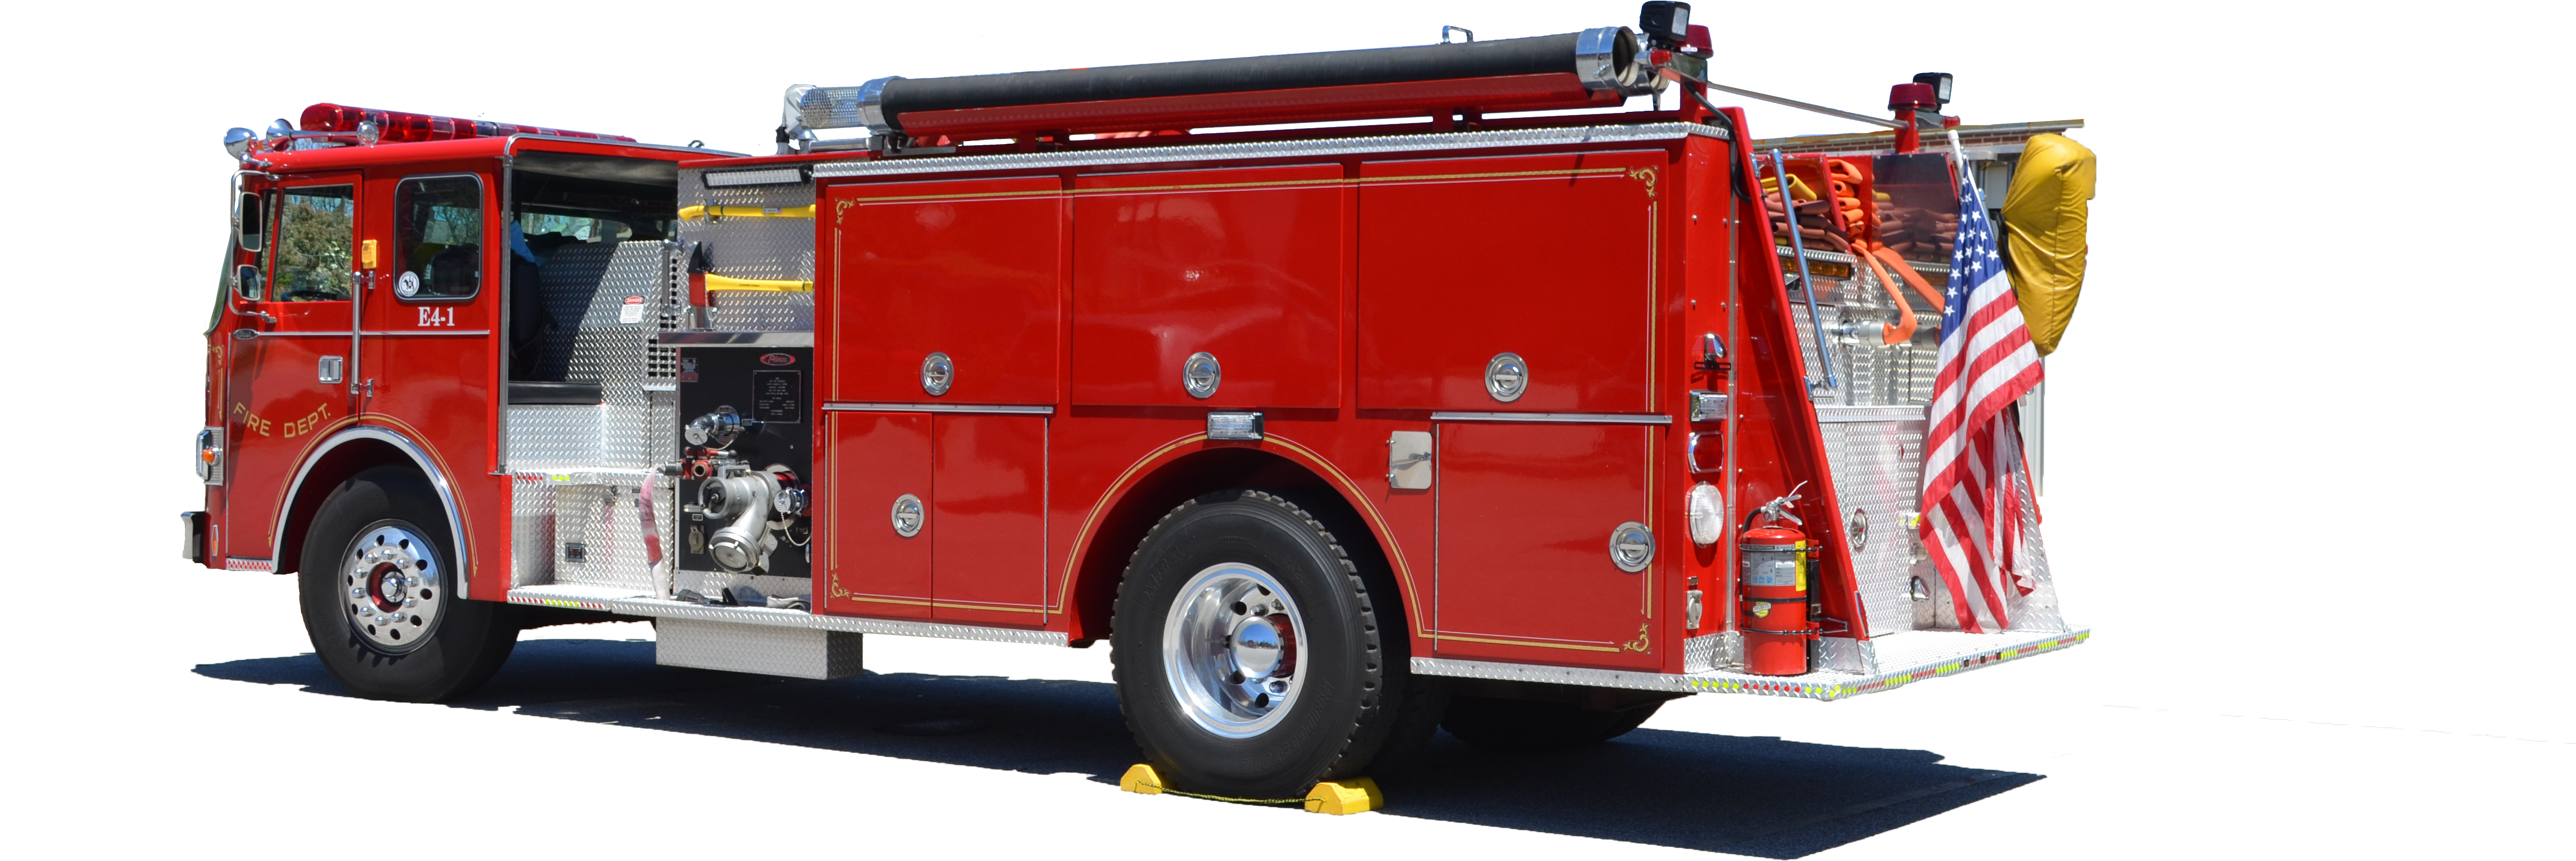 Fire Engine (4928x3264)